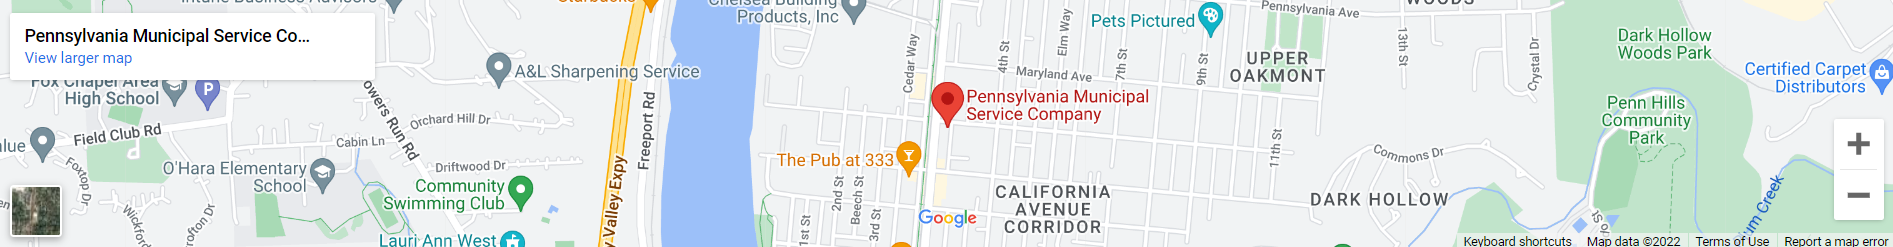 Pennsylvania Municipal Service Company